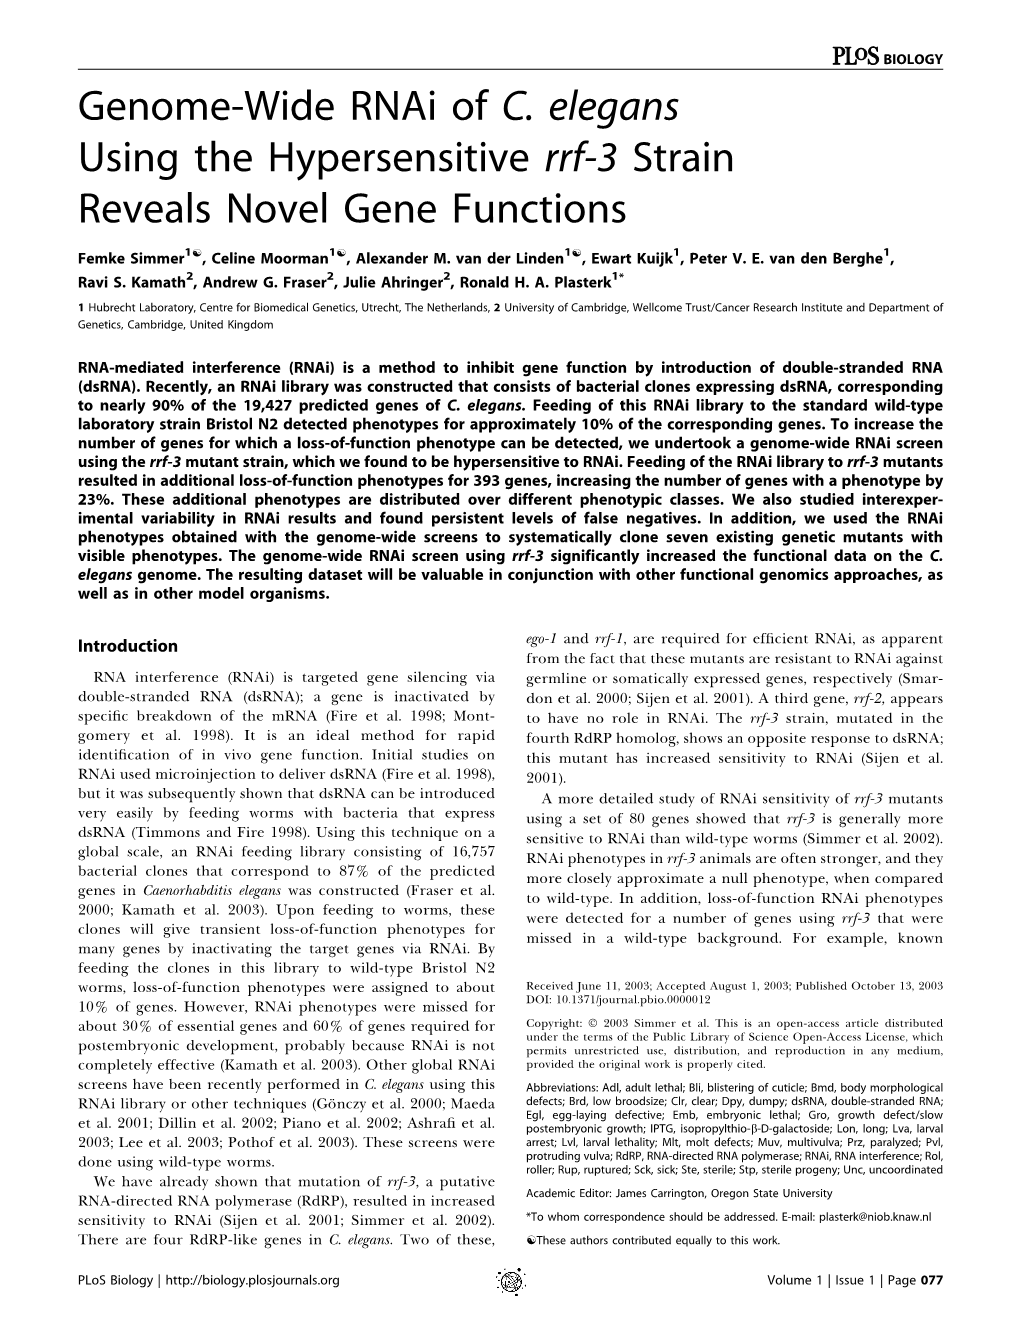 Genome-Wide Rnai of C. Elegans Using the Hypersensitive Rrf-3 Strain Reveals Novel Gene Functions